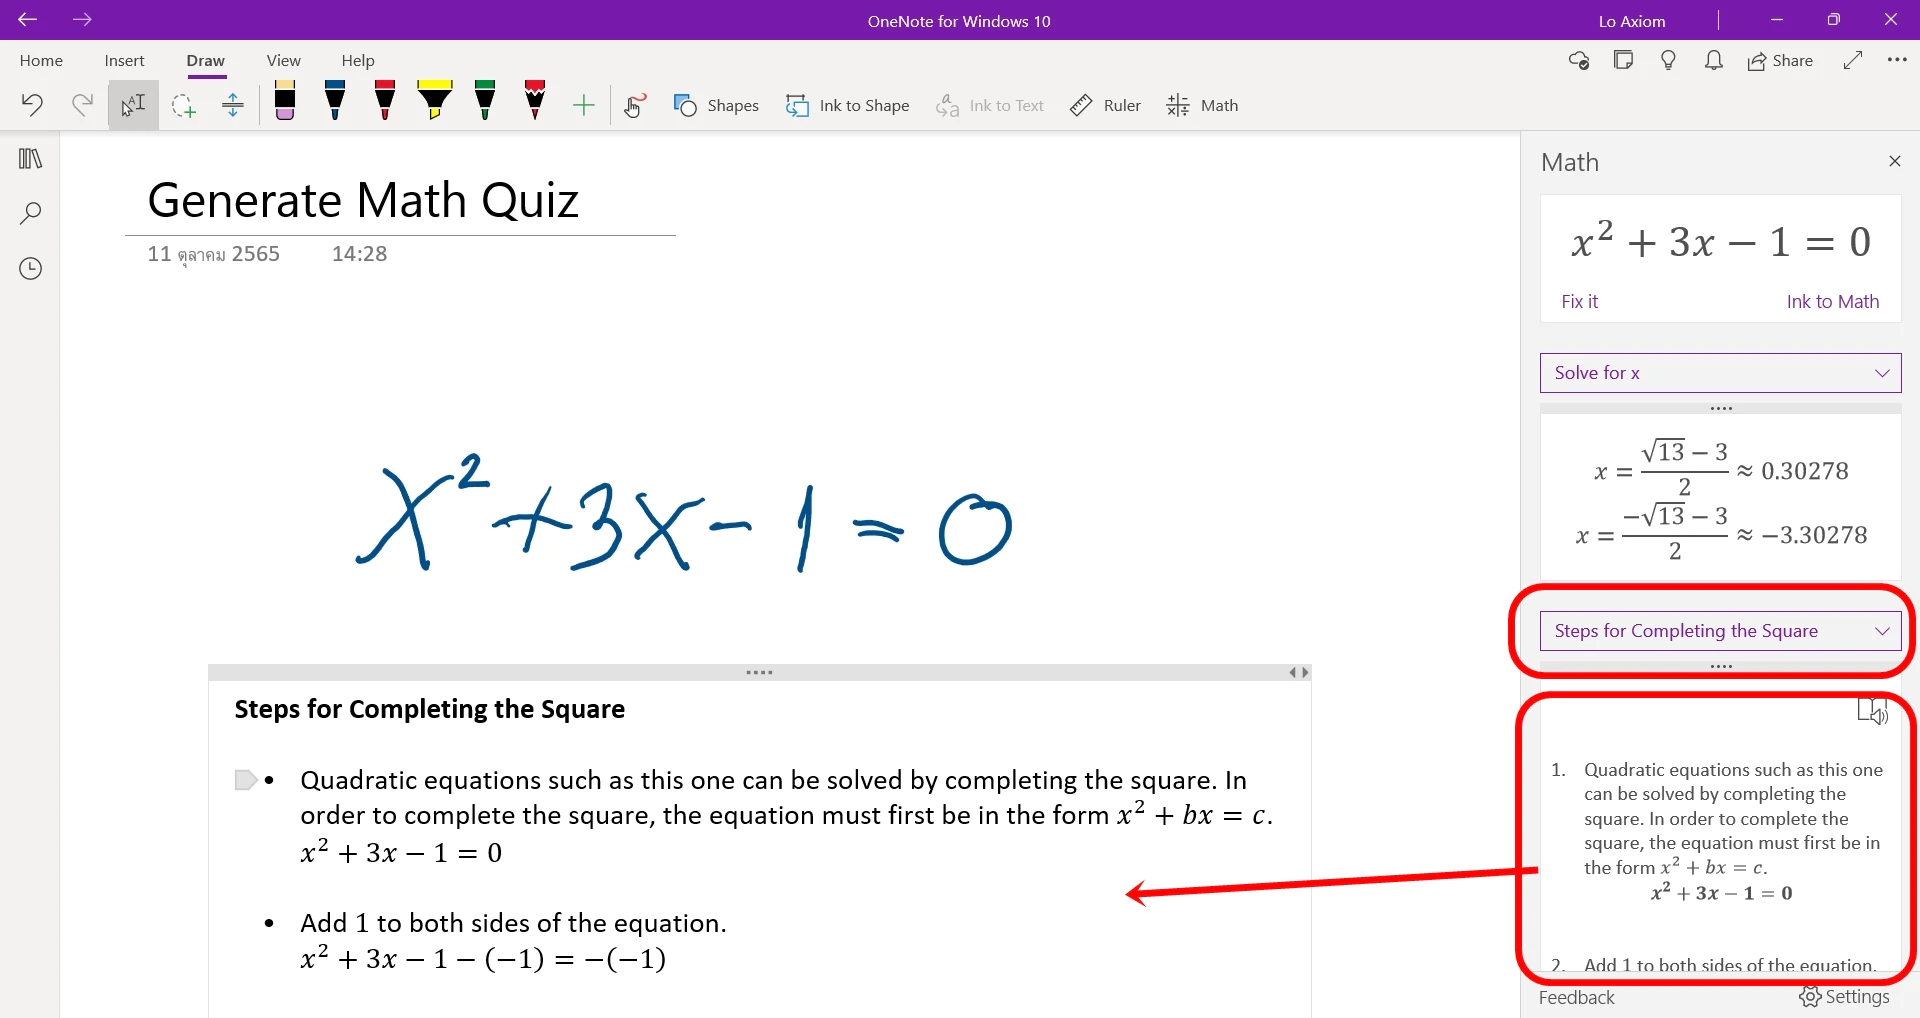 how to math in onenote solve 13 | Microsoft OneNote | [How to] แนะนำ Math ใน OneNote แค่เขียนโจทย์ มันจะช่วยแก้ แสดงวิธีทำ และวาดกราฟ